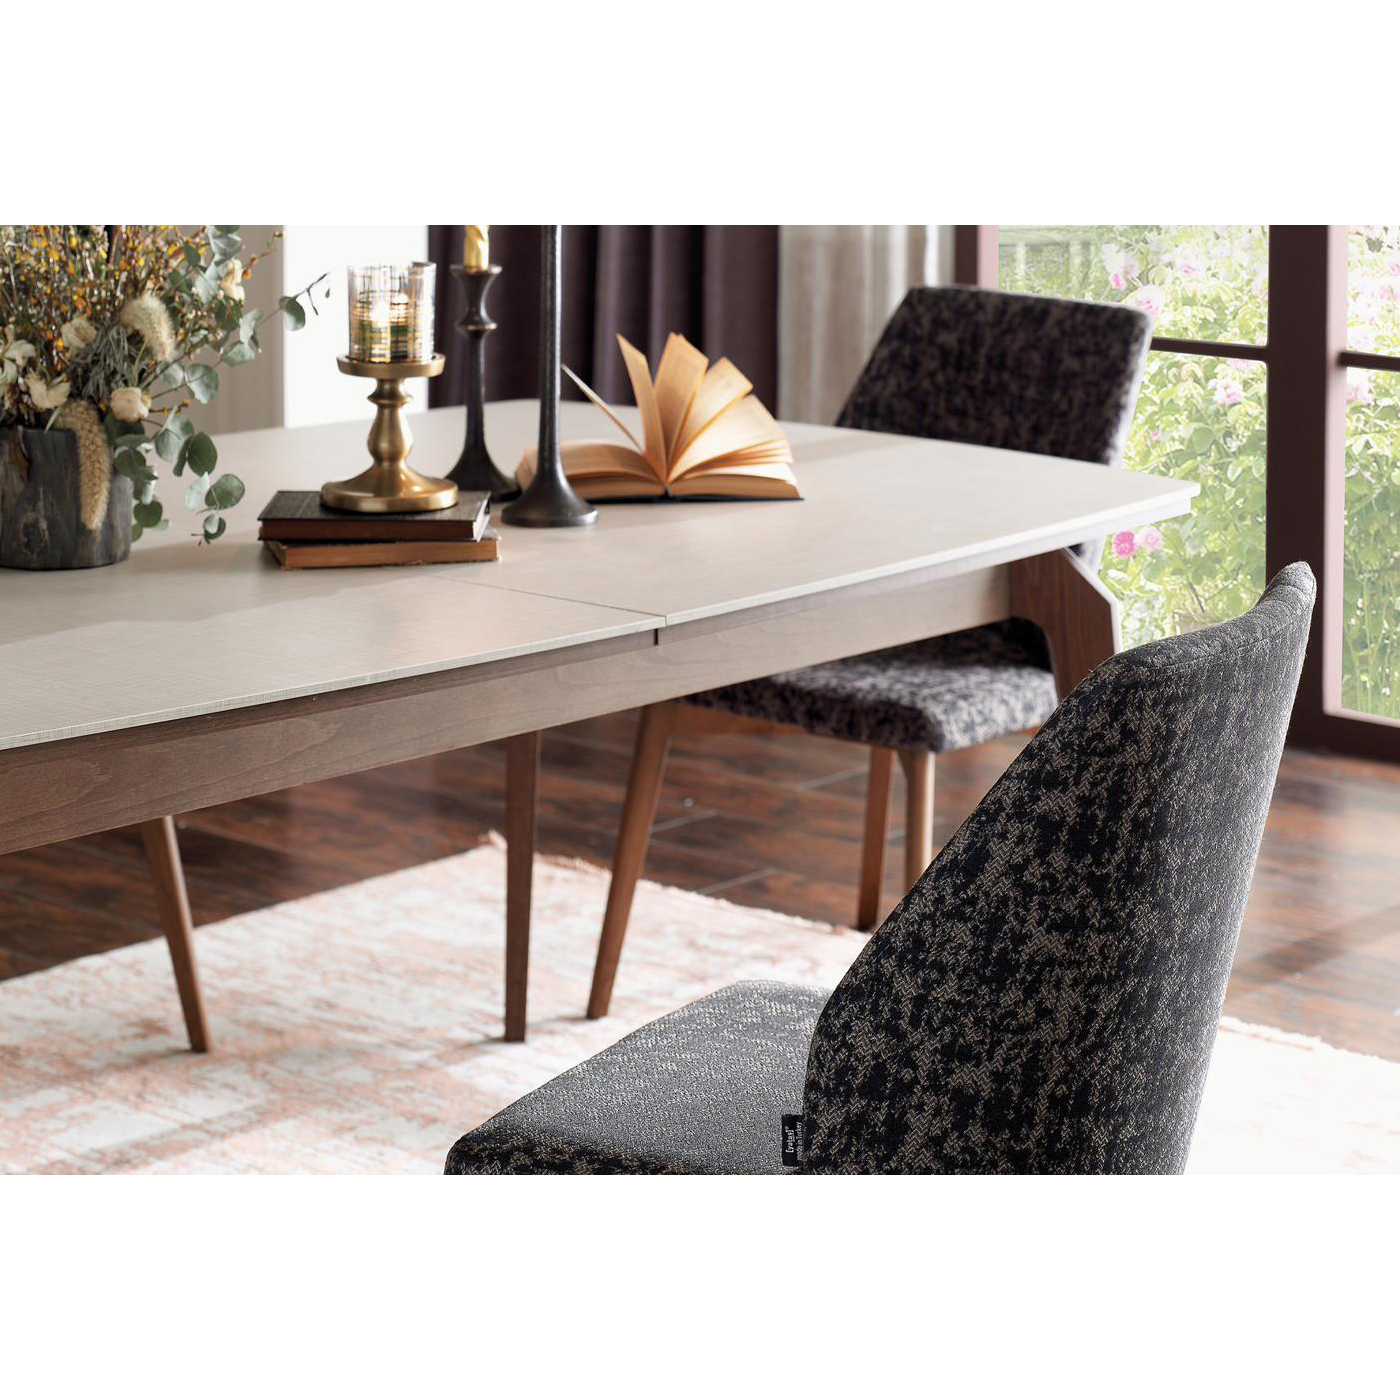 Стол обеденный Enza Home Netha, раздвижной, размер 160(200)х90х77 см55555000001183